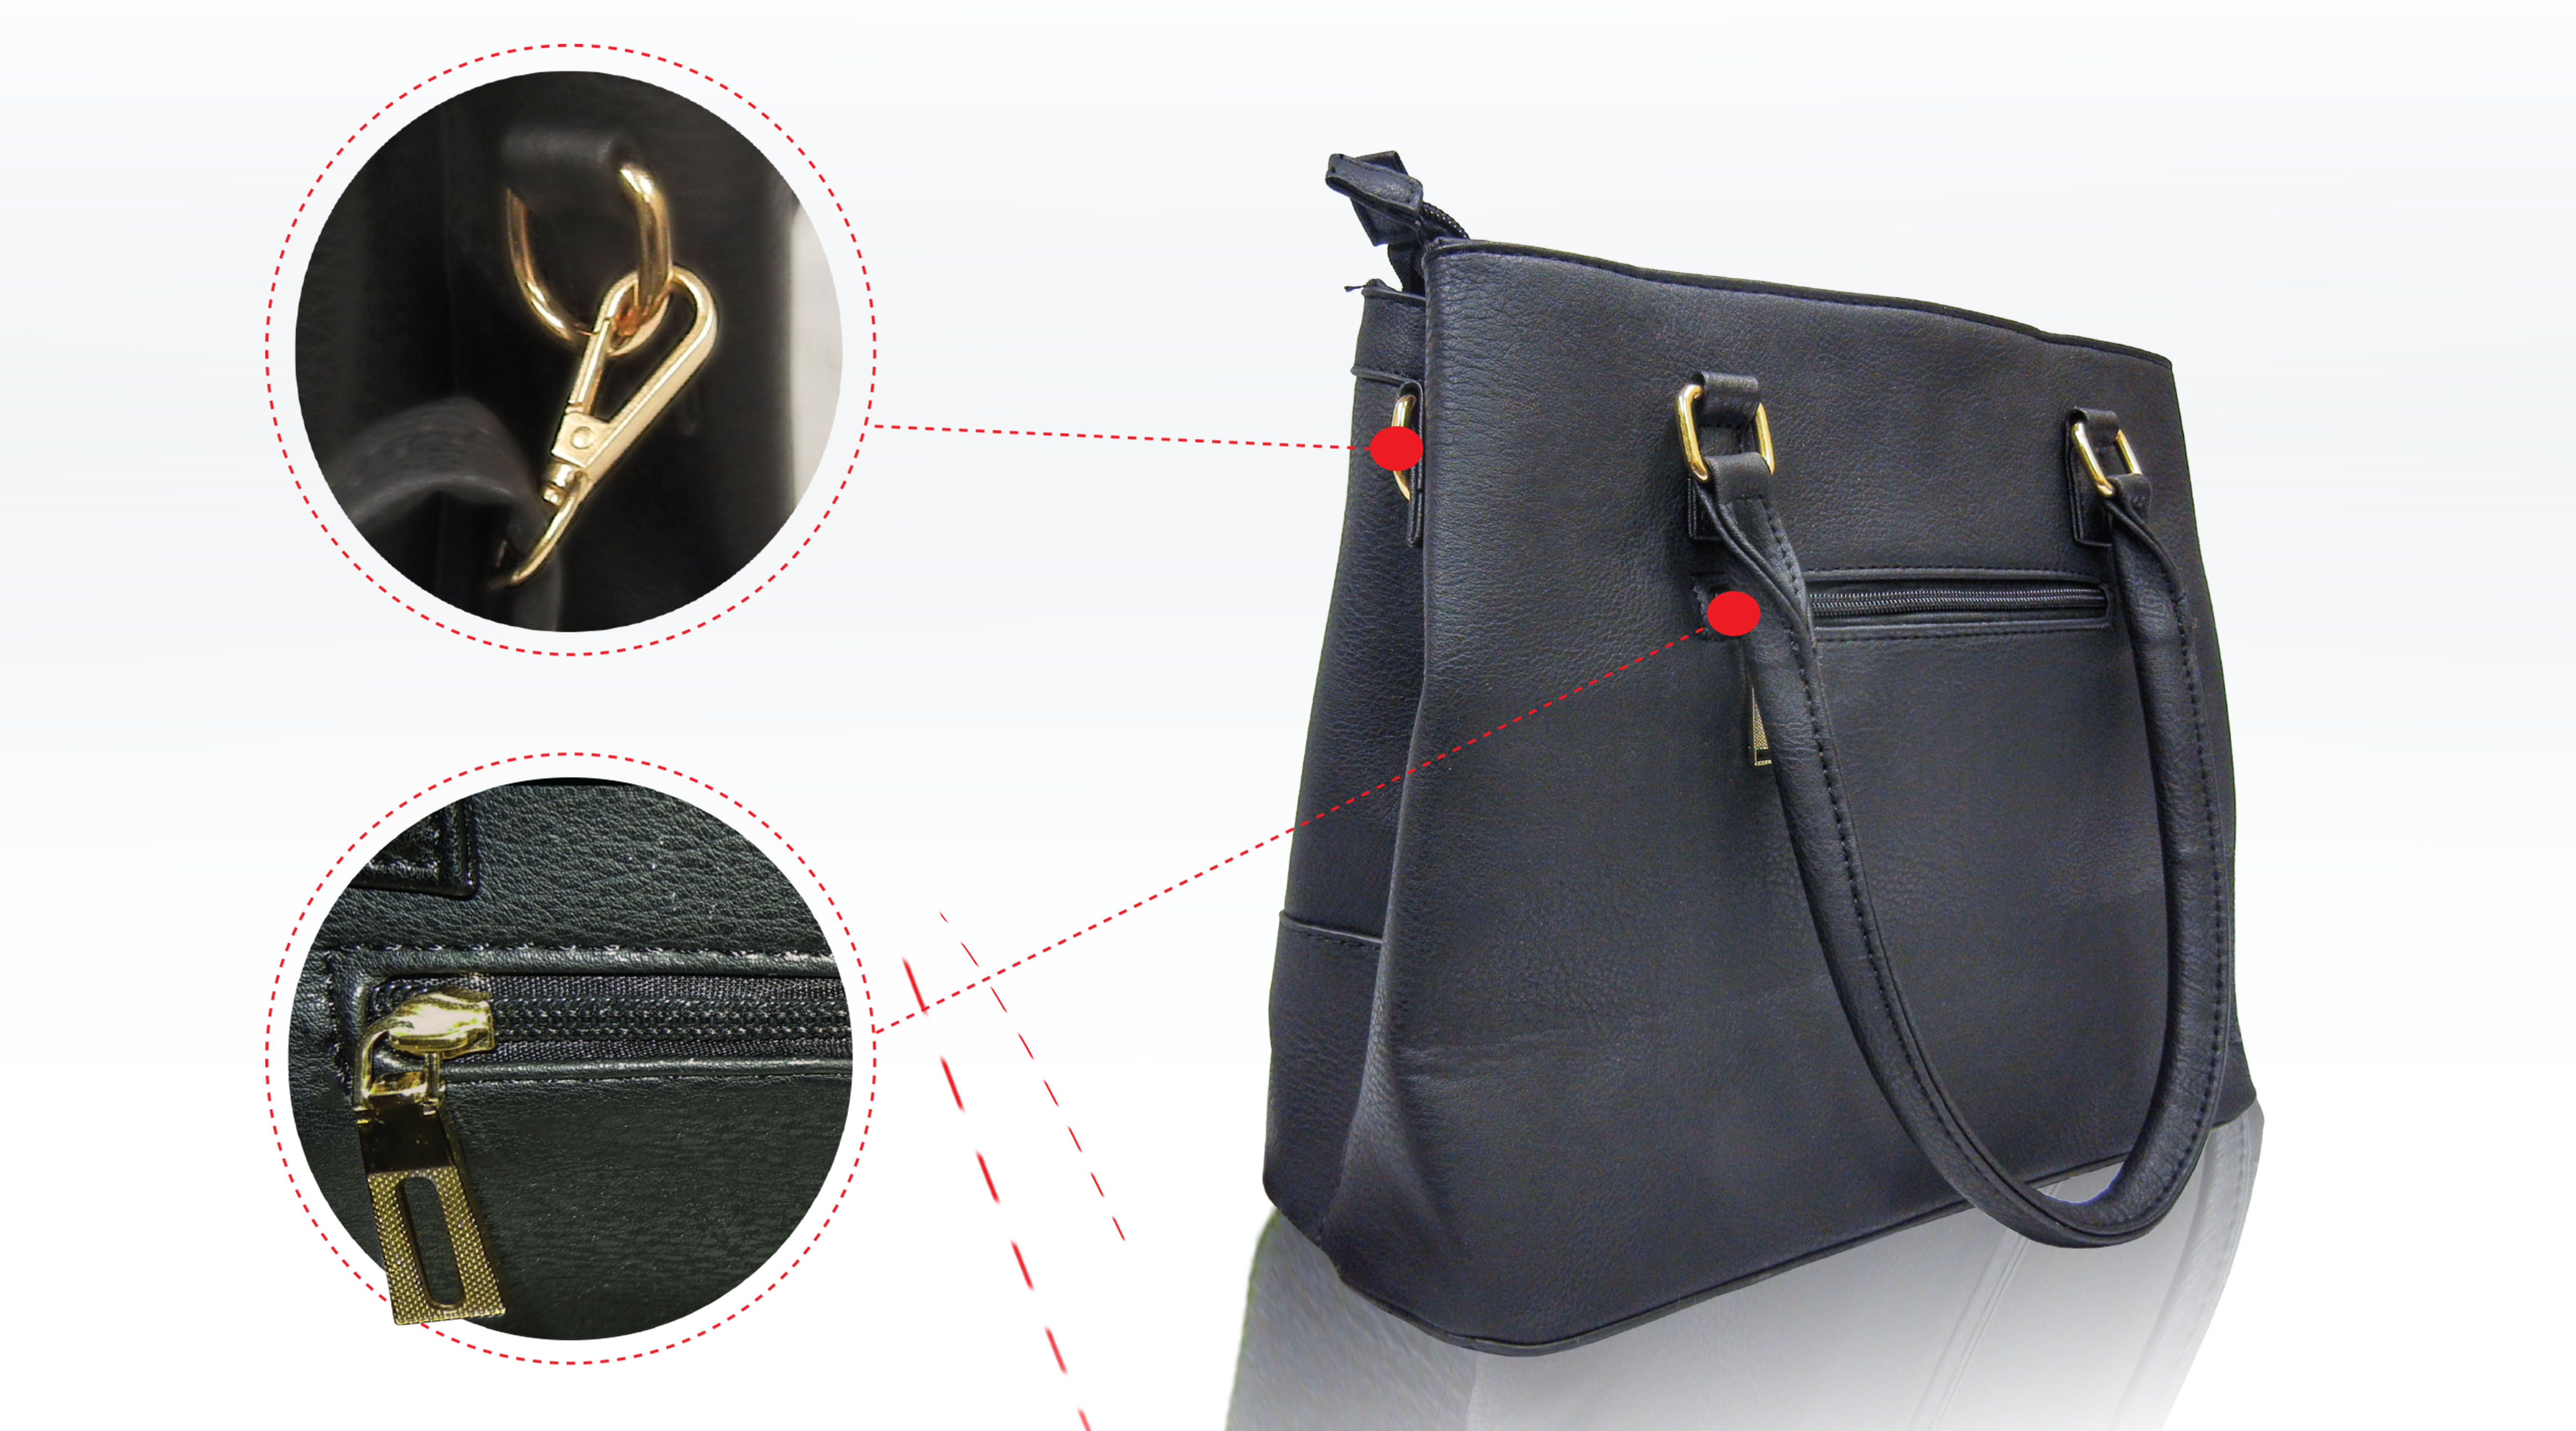 Black Ladies Handbag with removable straps